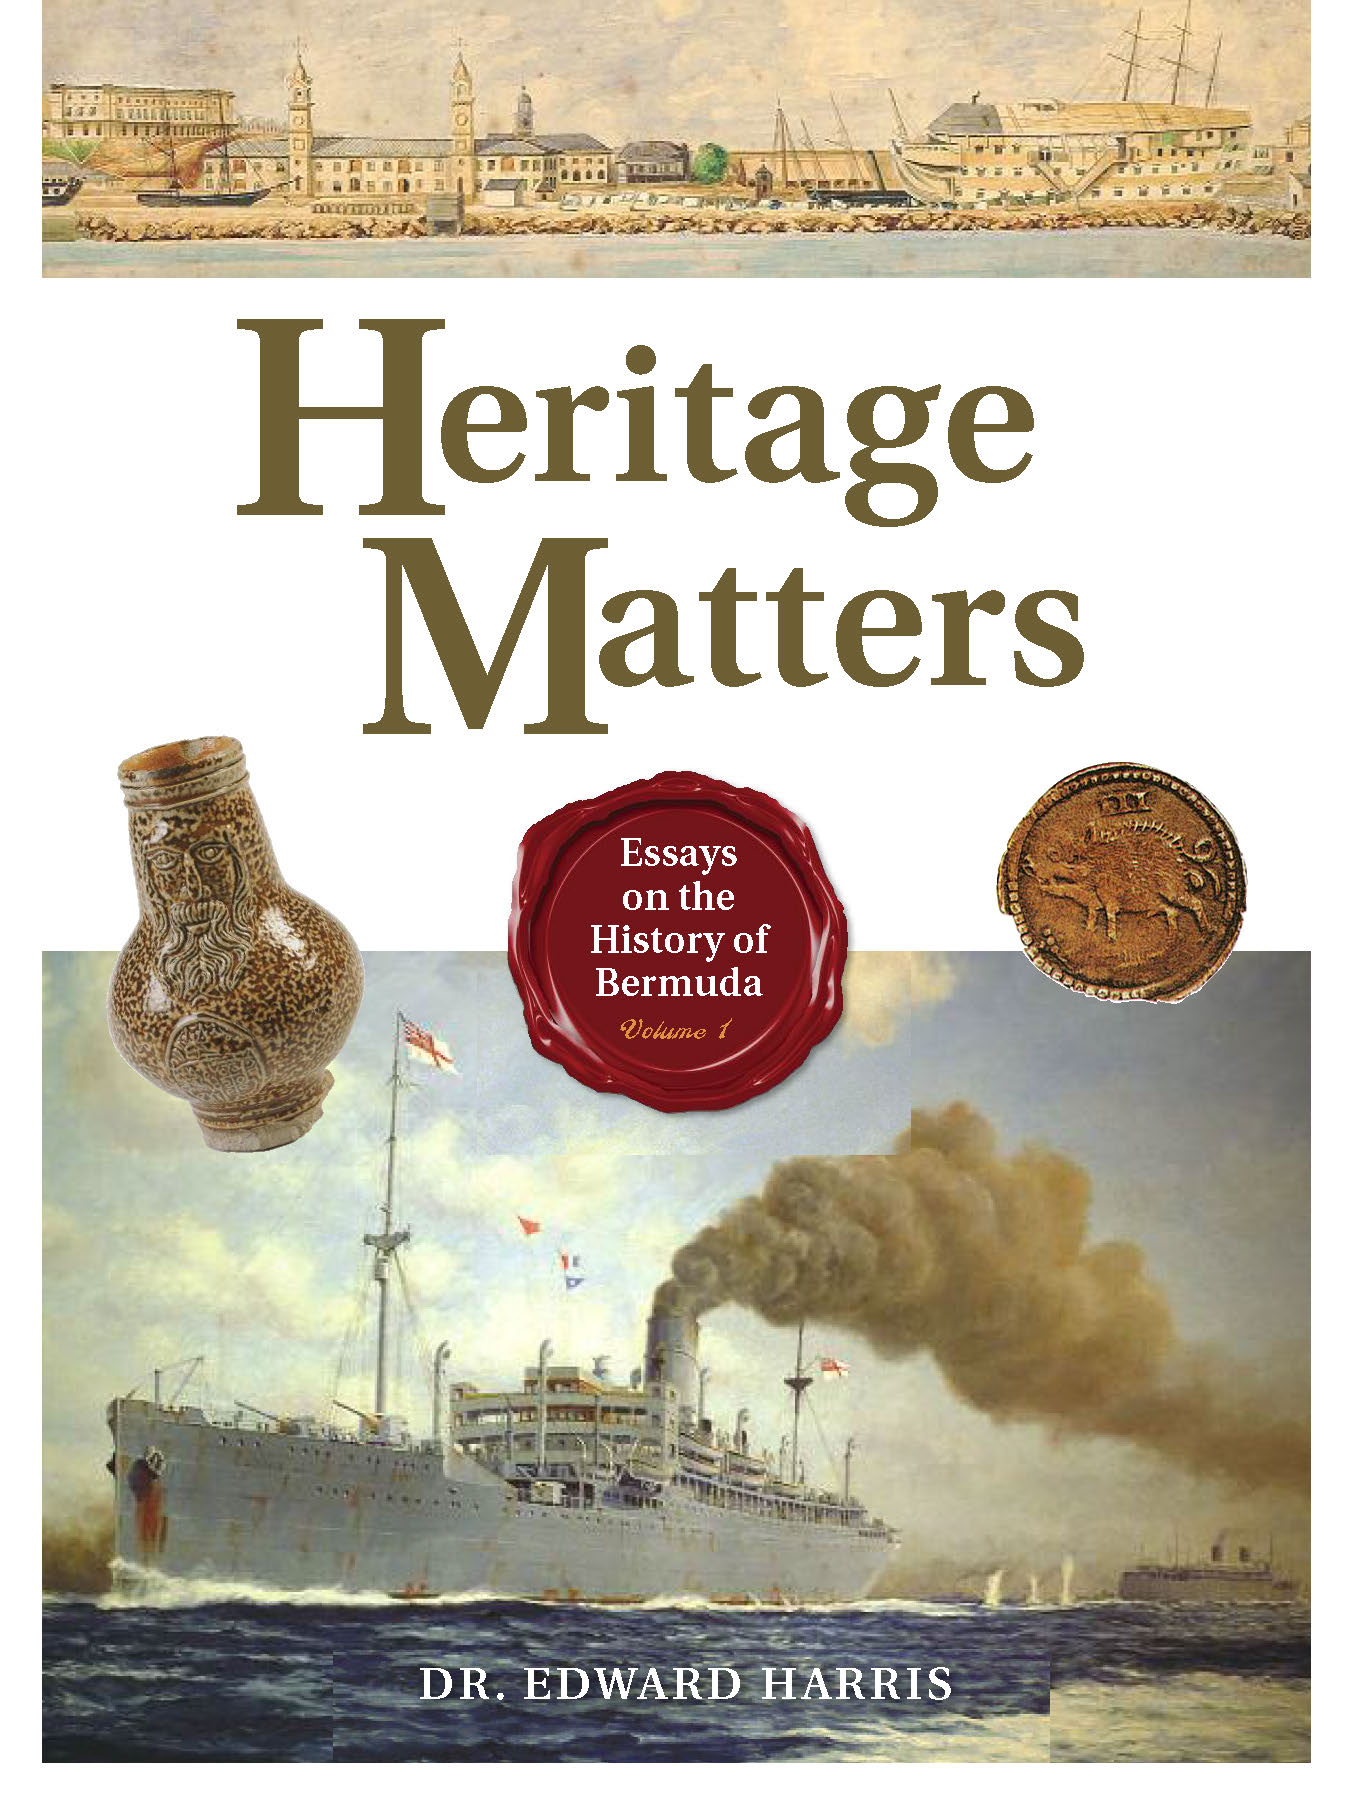 Heritage Matters Volume 1